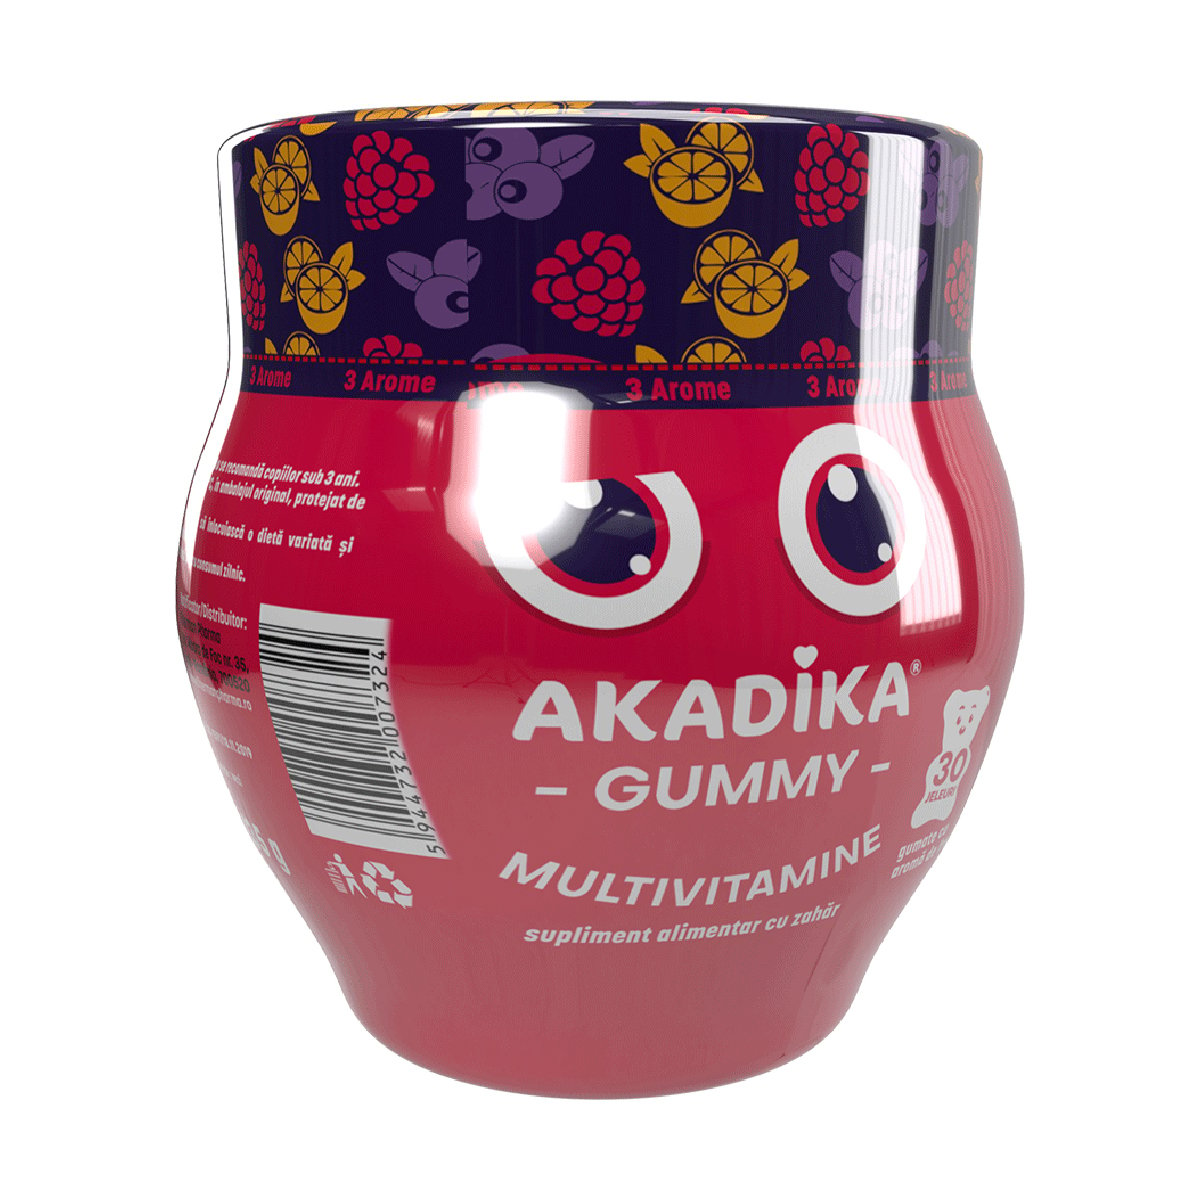 Gummy Multivitamine, 3 arome, 30 buc, Akadika Akadika